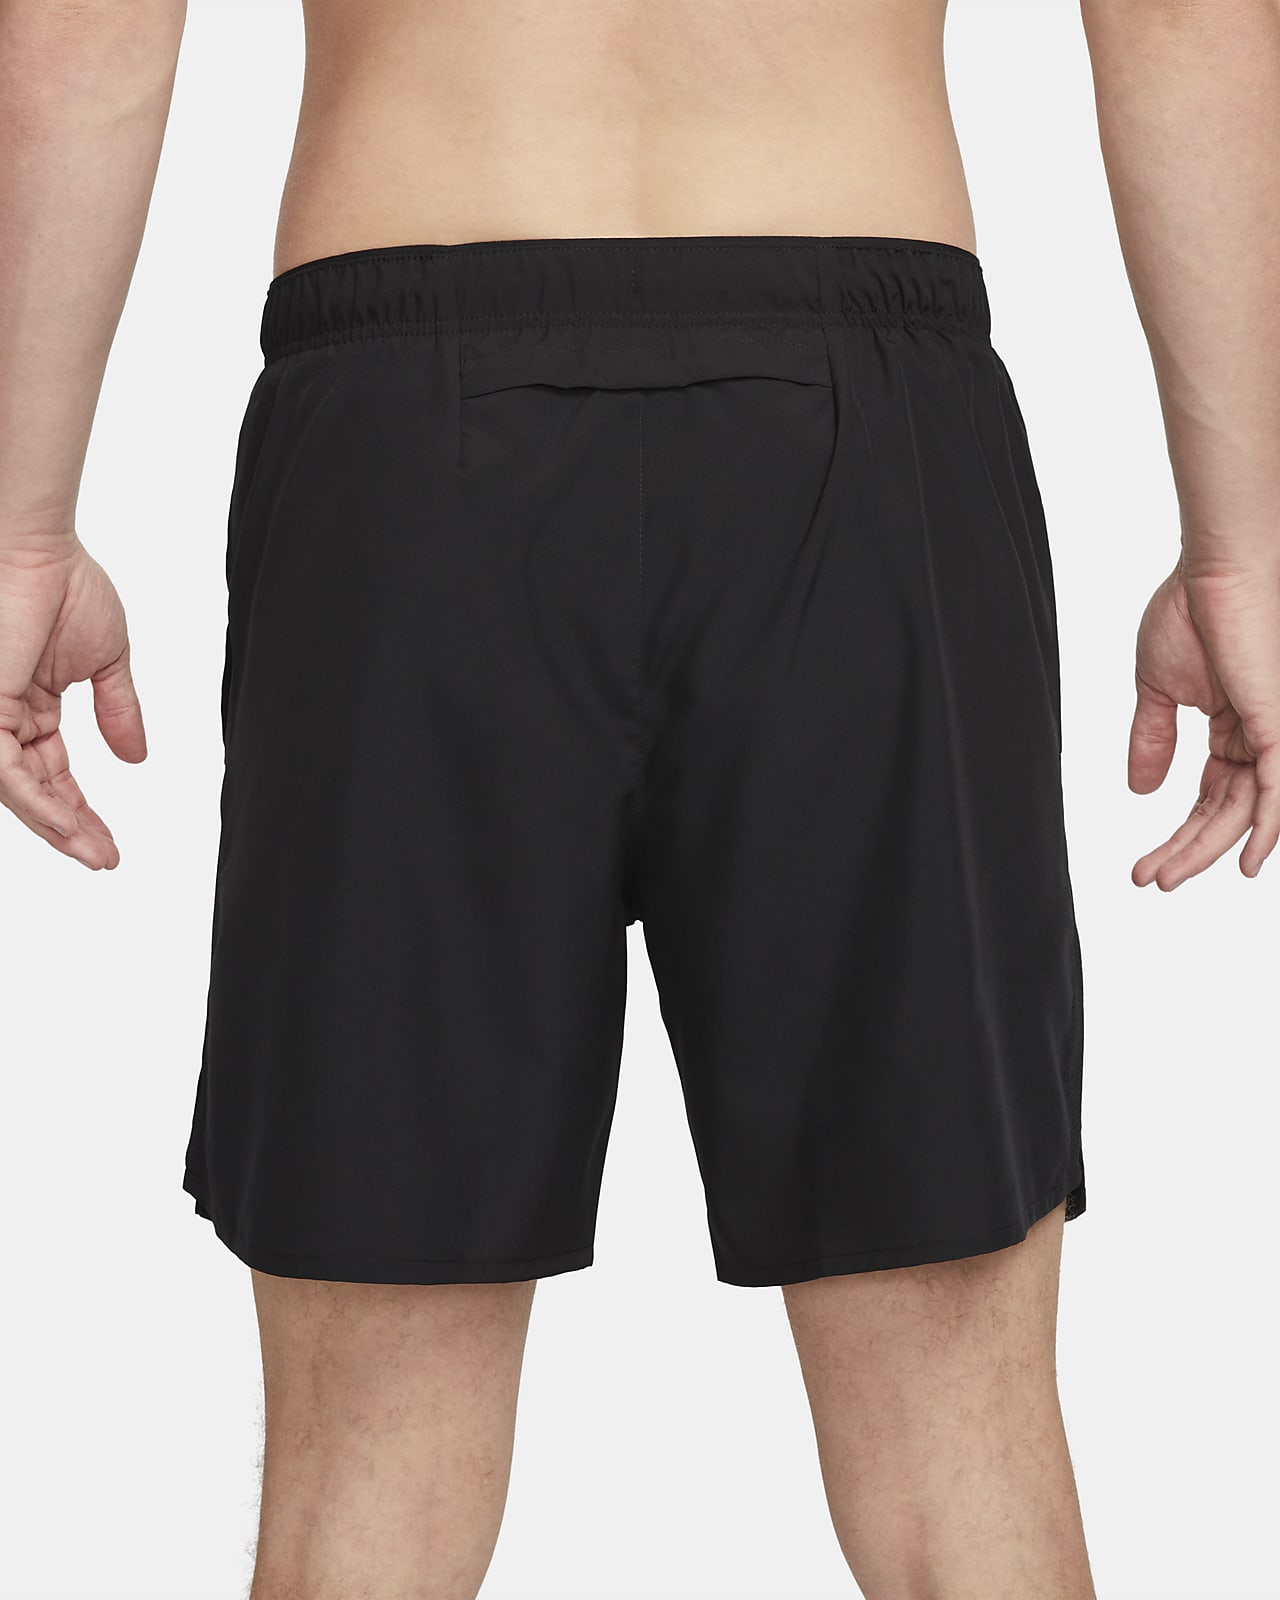 nike men's shorts with back pocket